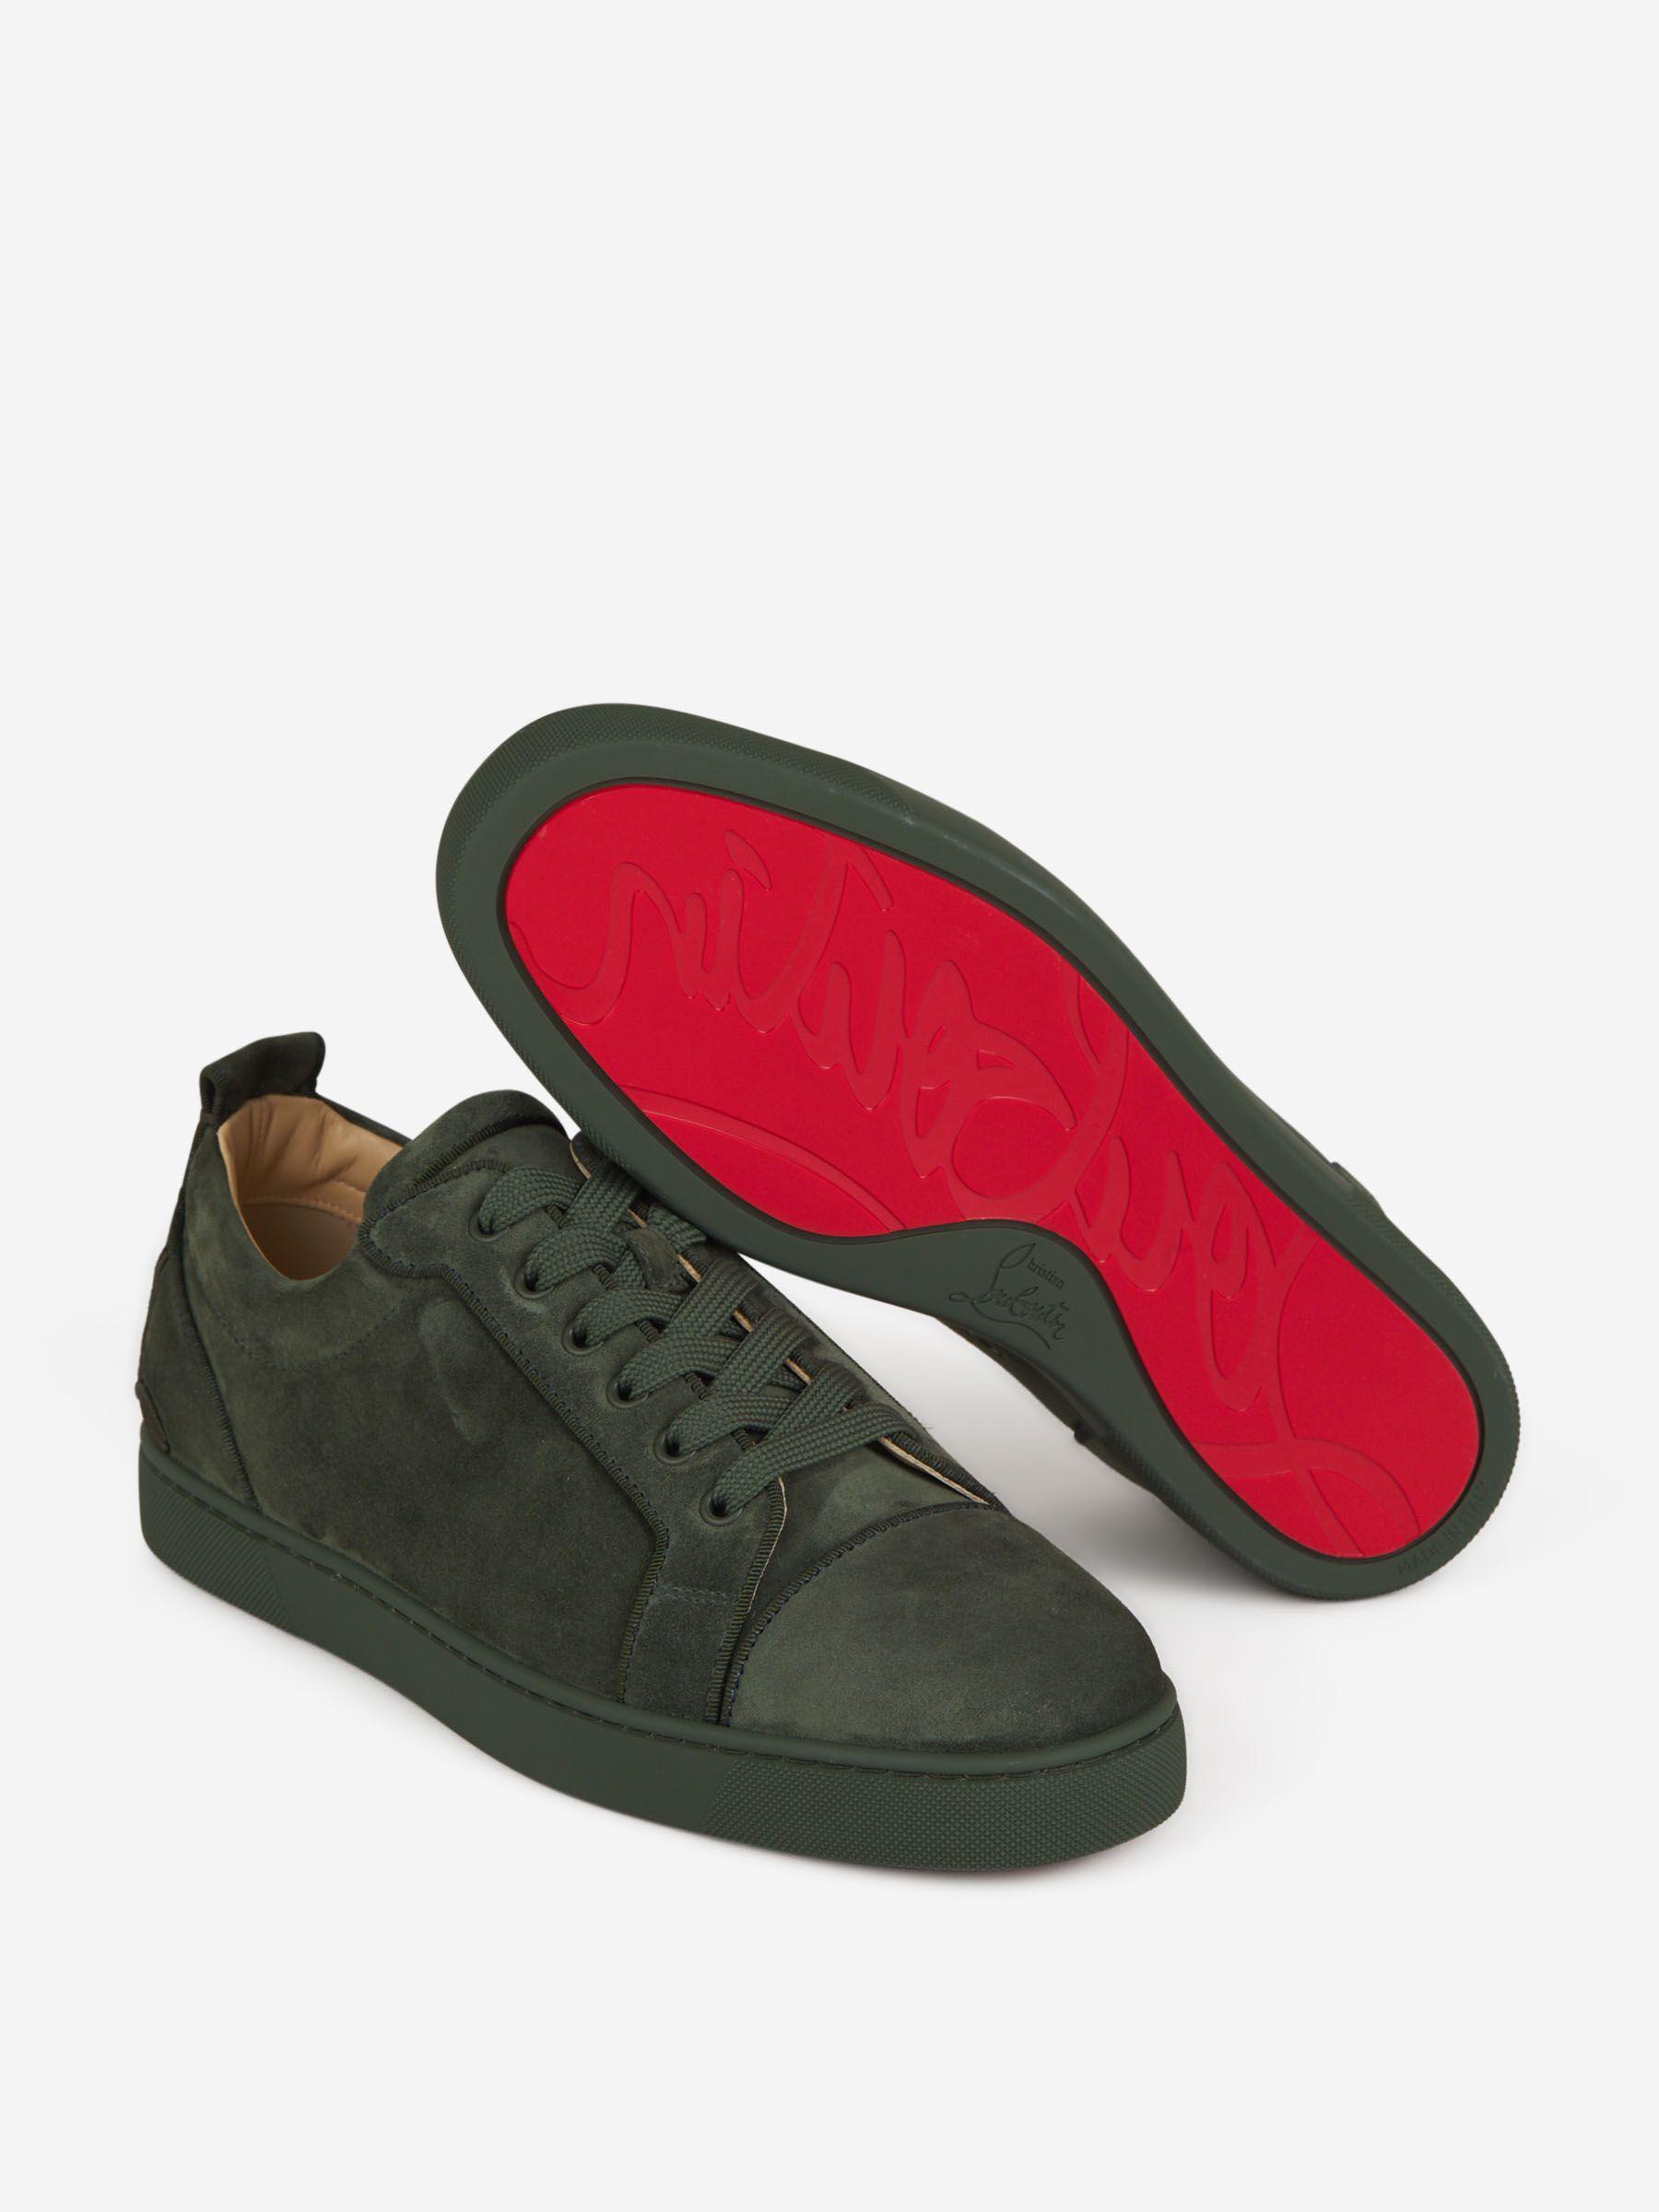 Fun Louis Junior Suede Sneakers in Green - Christian Louboutin